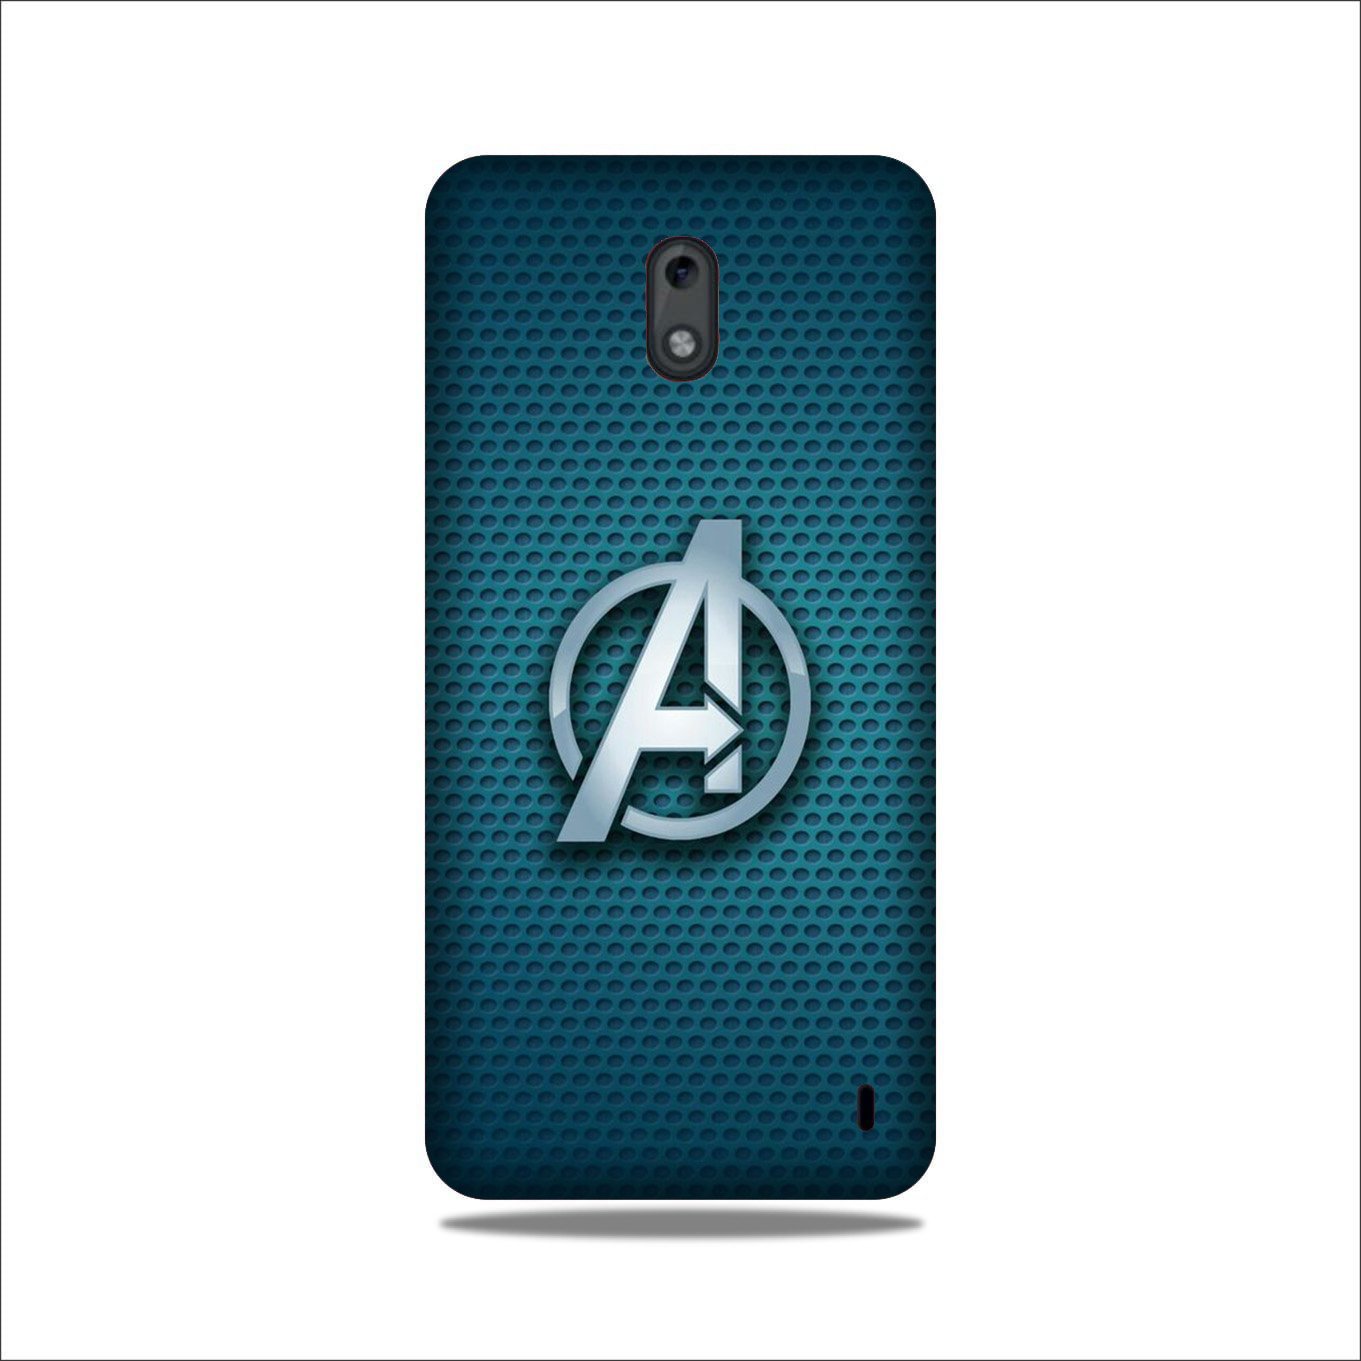 Avengers Case for Nokia 2.2 (Design No. 246)